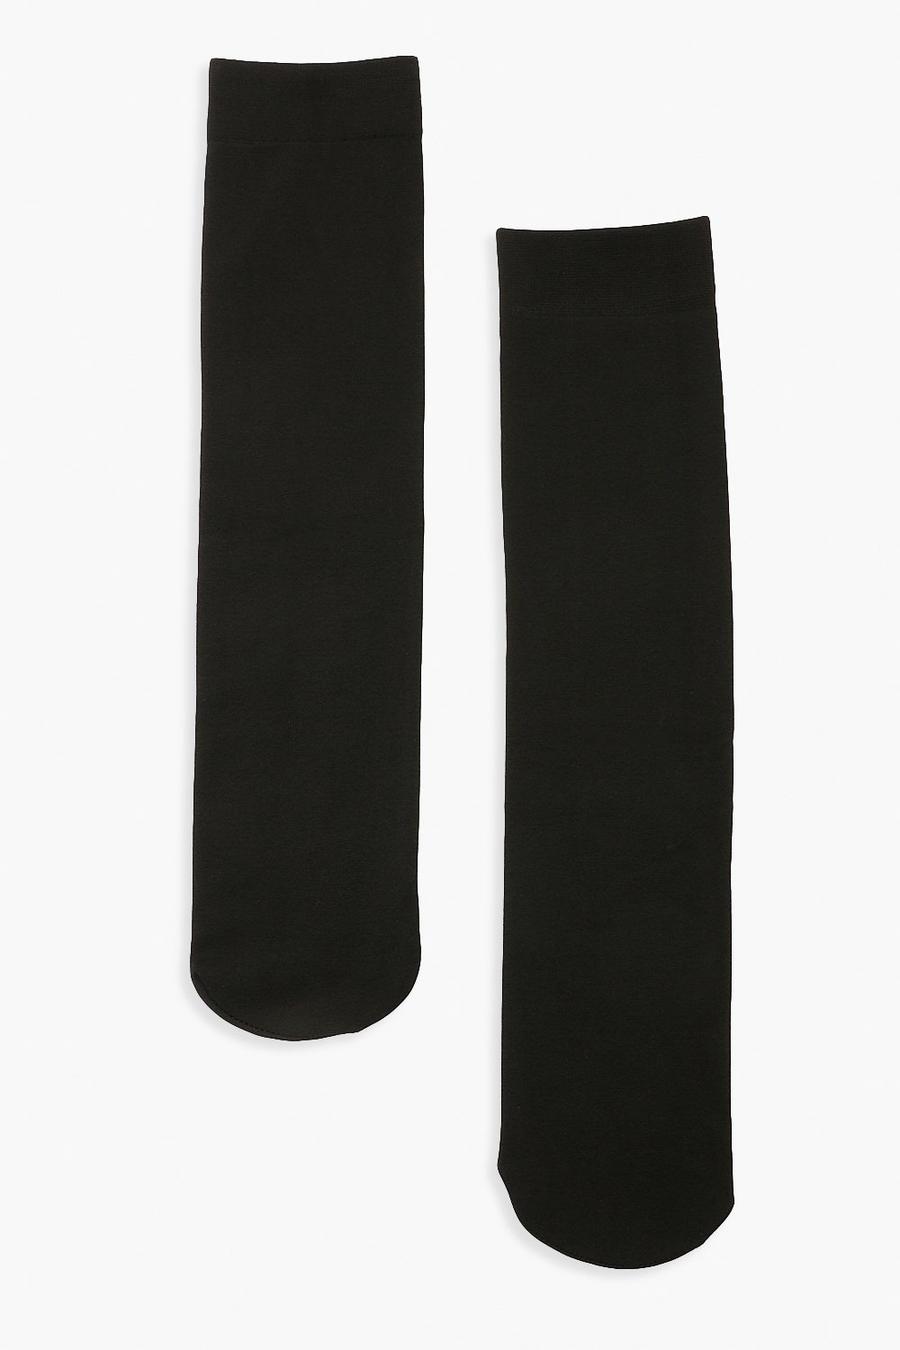 Single Black Thermal Knee High Socks image number 1